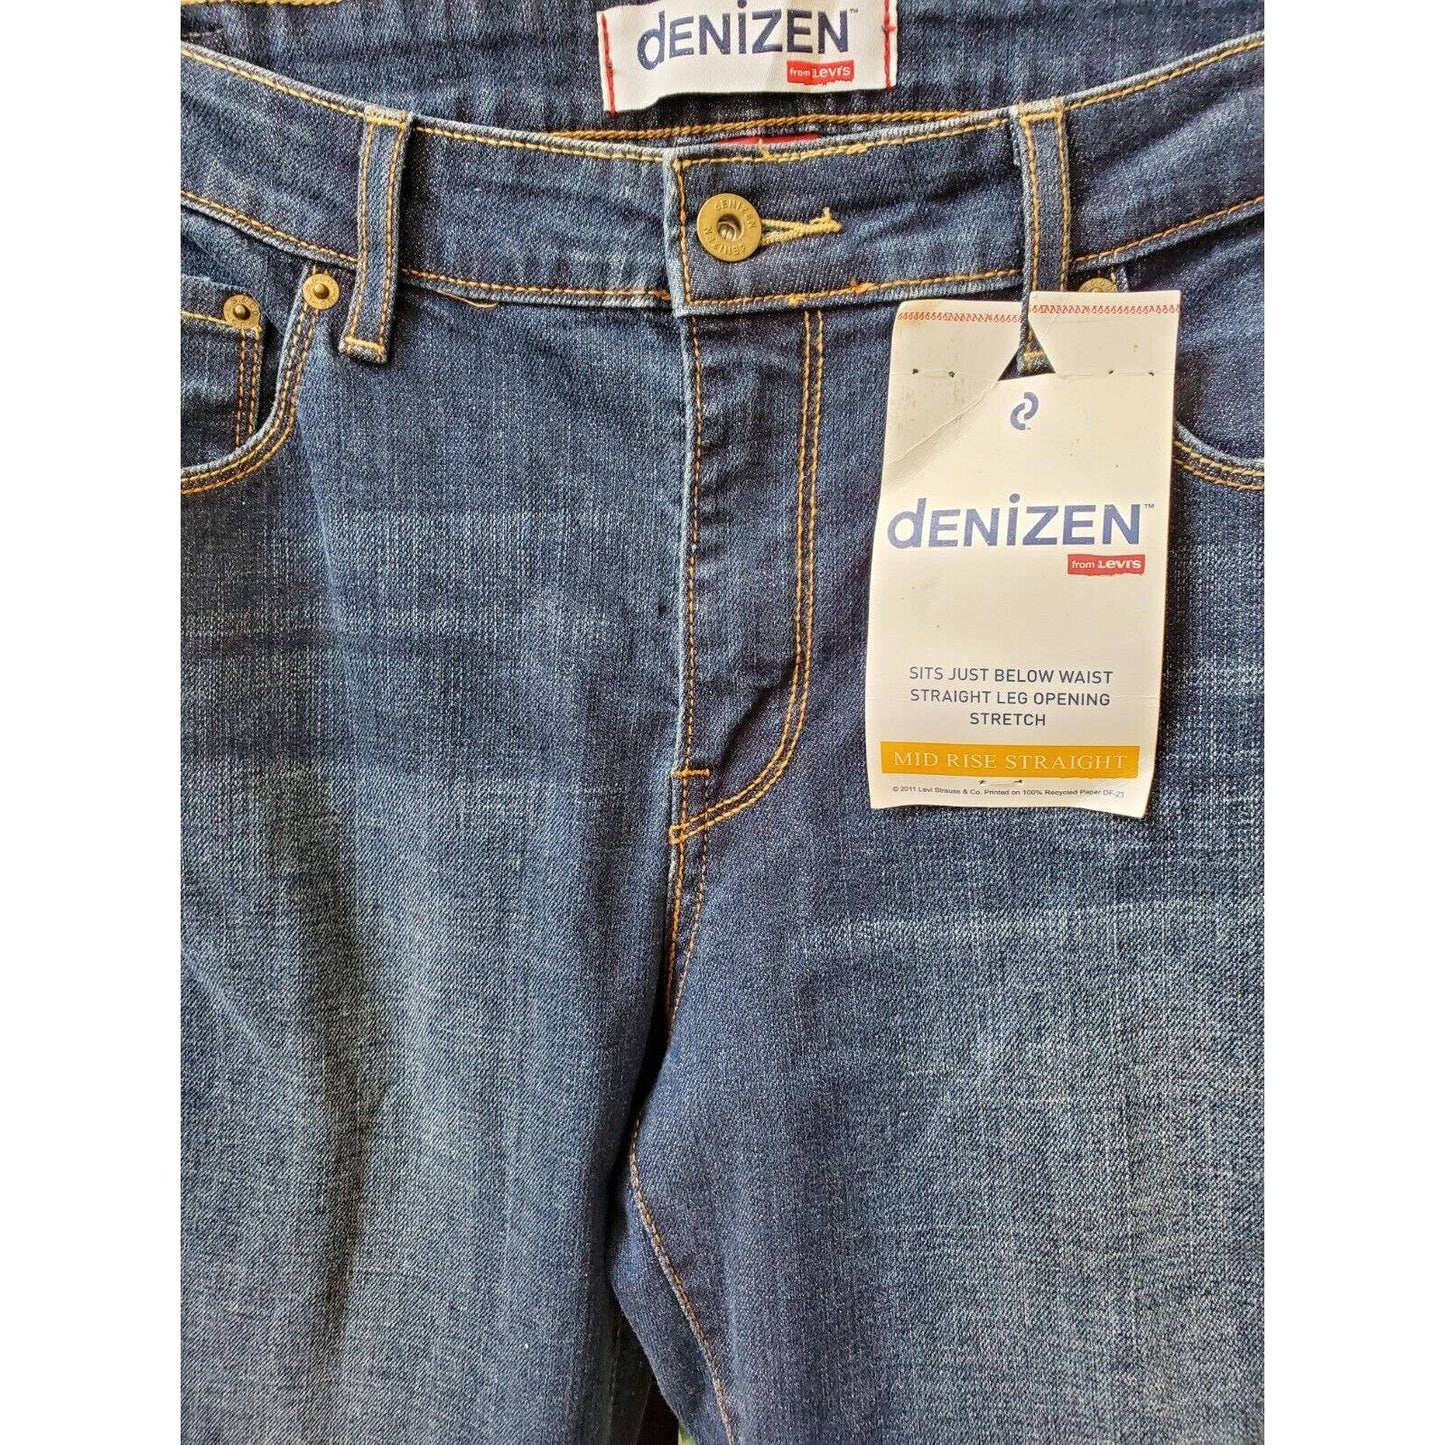 Denizen Women's Blue Denim Cotton Mid Rise Pull on Straight Jeans Pant Size 16M